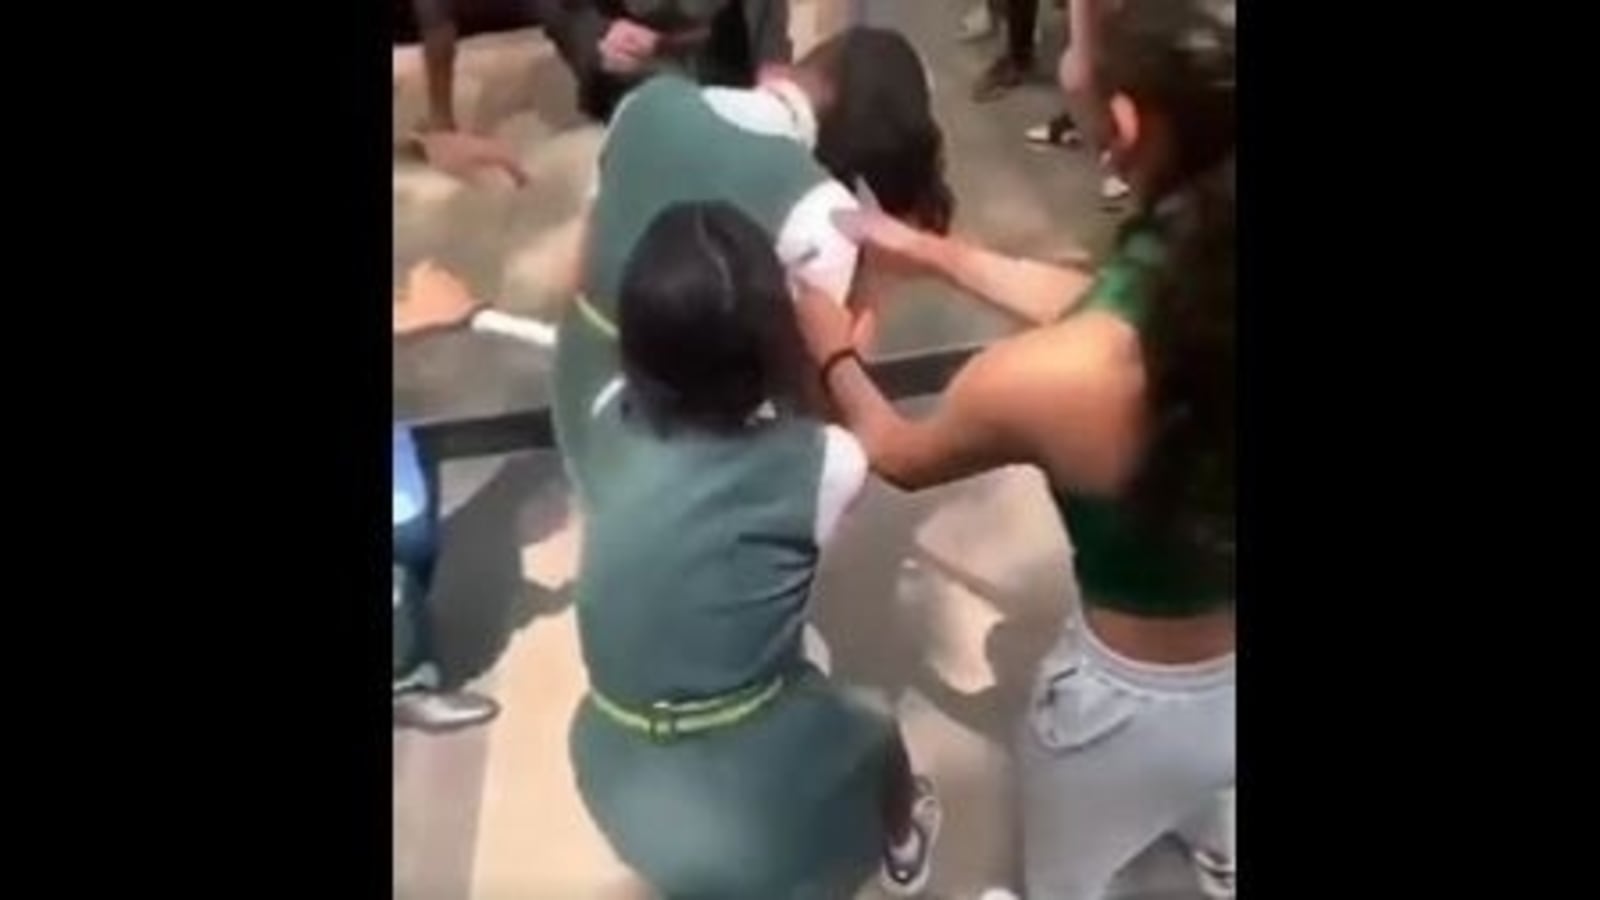 1600px x 900px - Video of Bengaluru girls fighting on street in school uniform emerges |  Latest News India - Hindustan Times